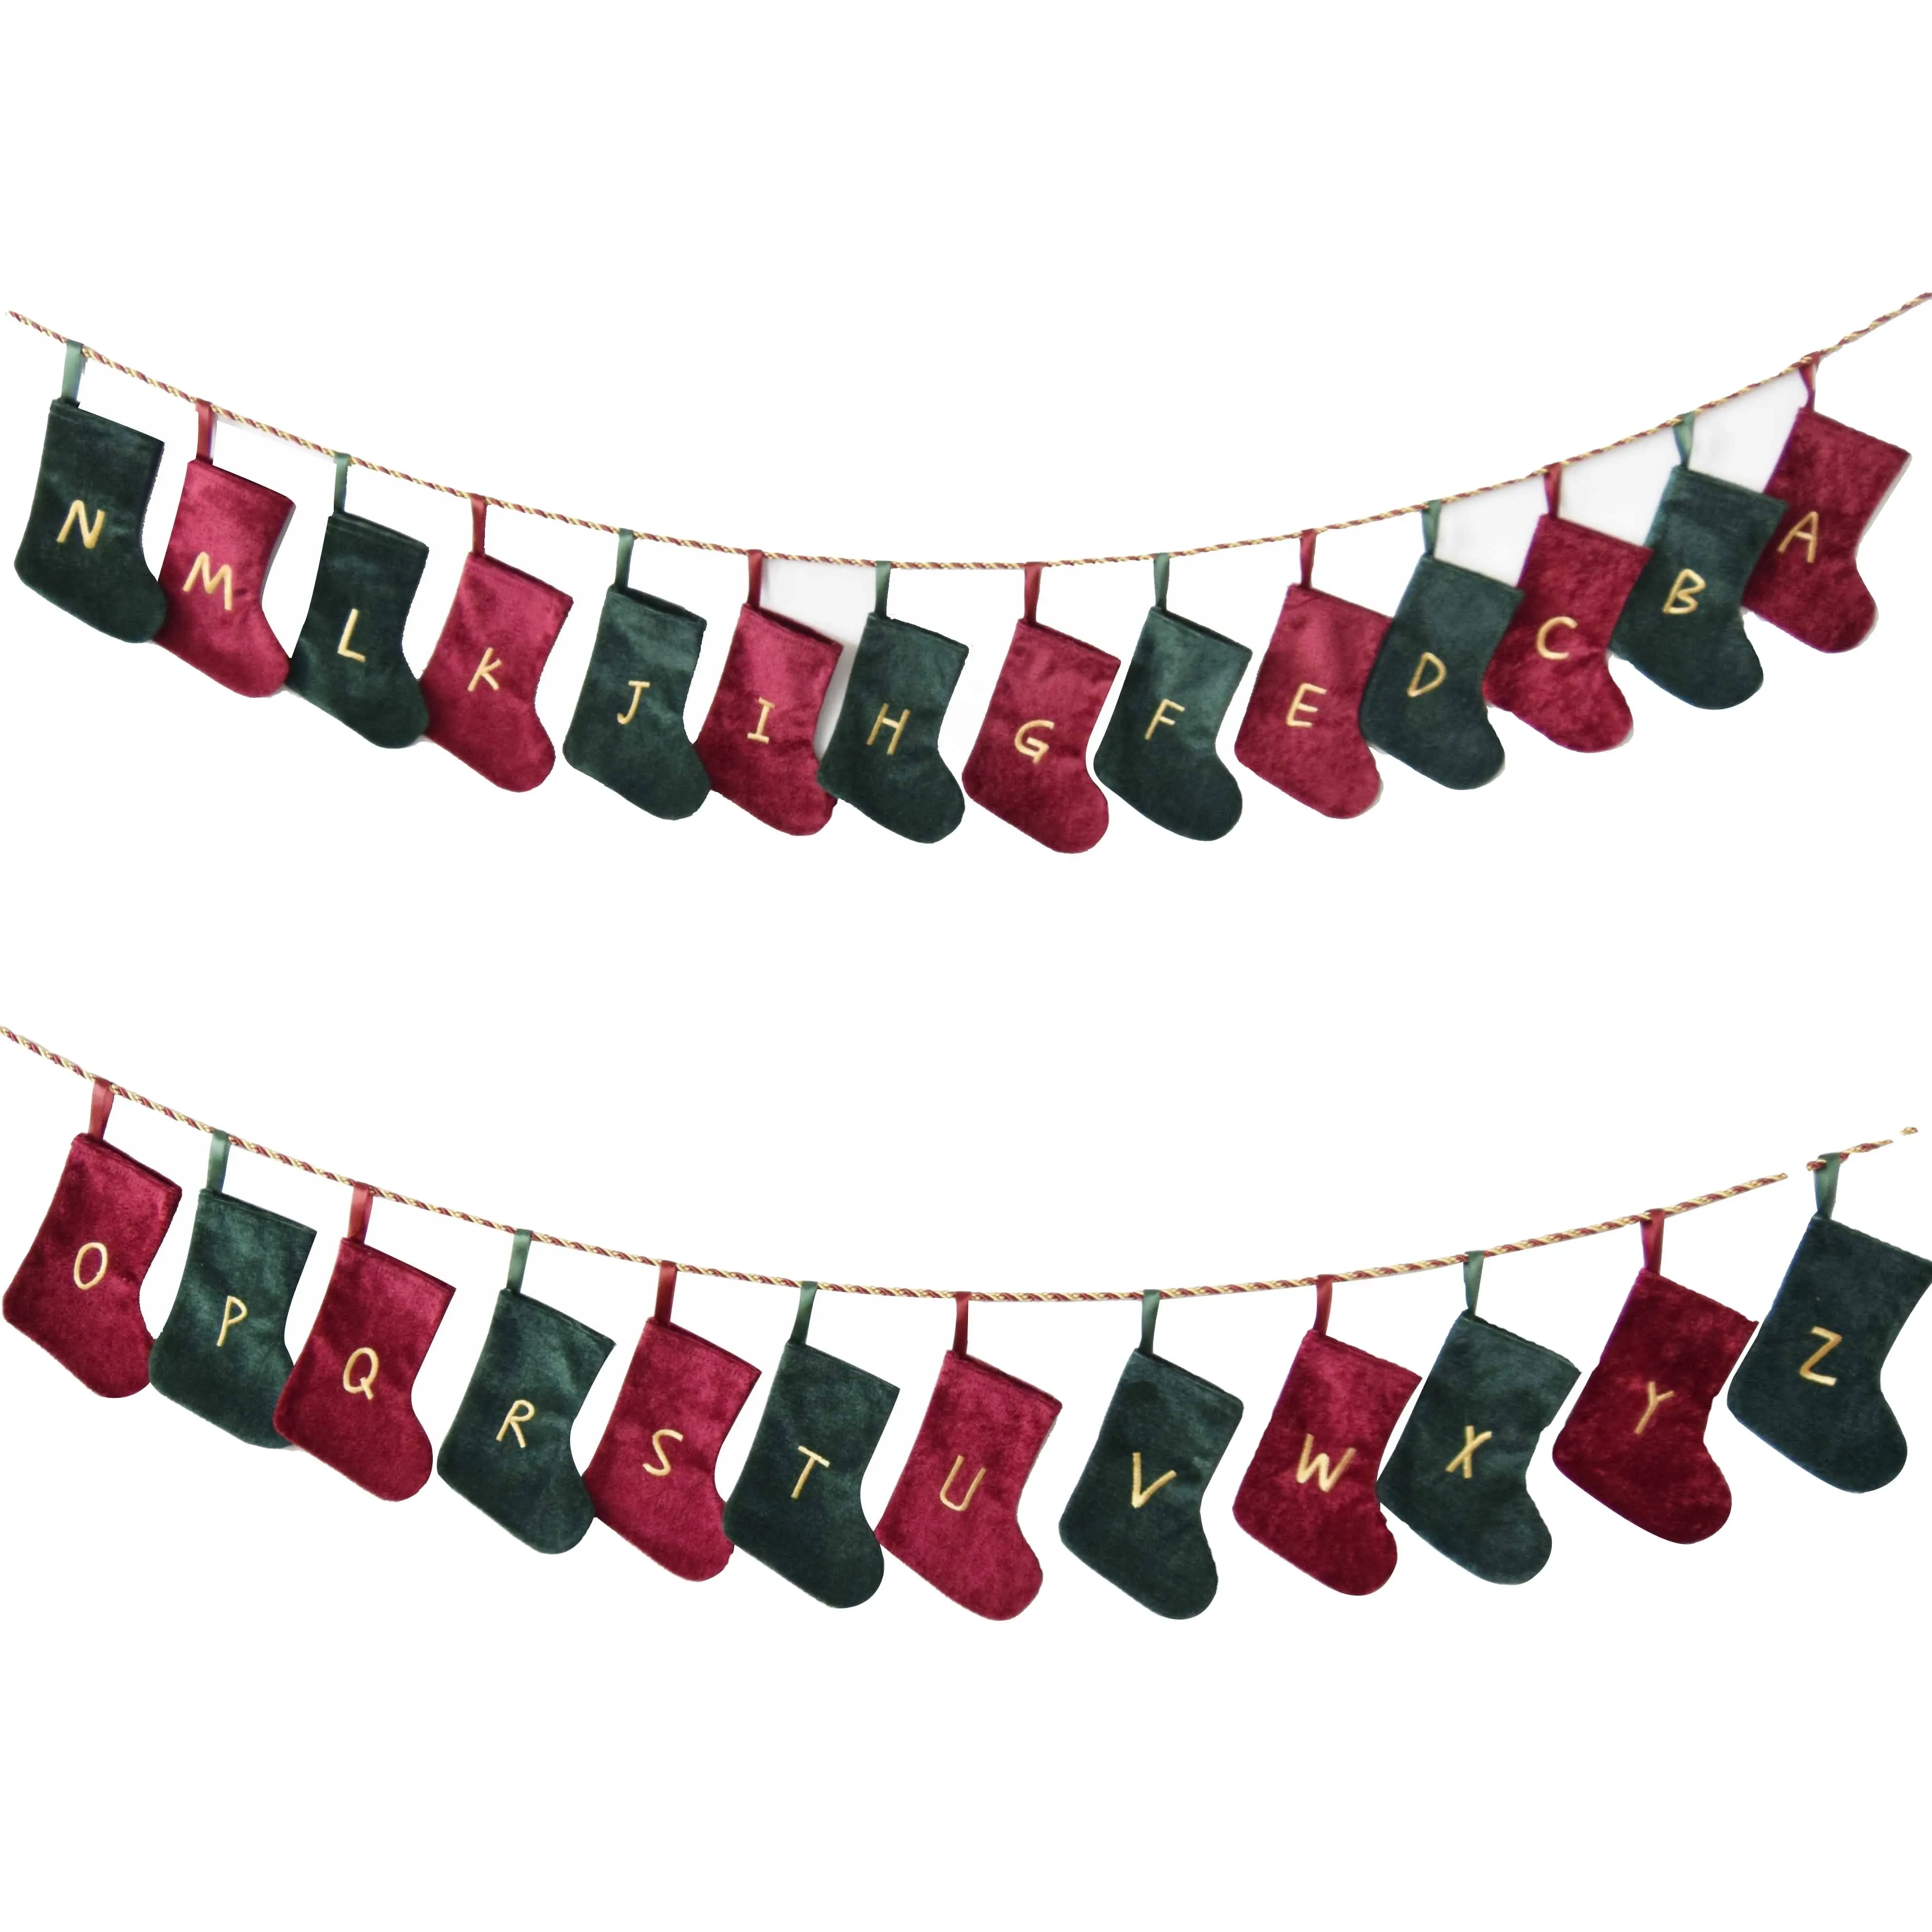 Velvet stocking embroider letter A-Z Green and Red mini Christmas stocking 26pcs per set